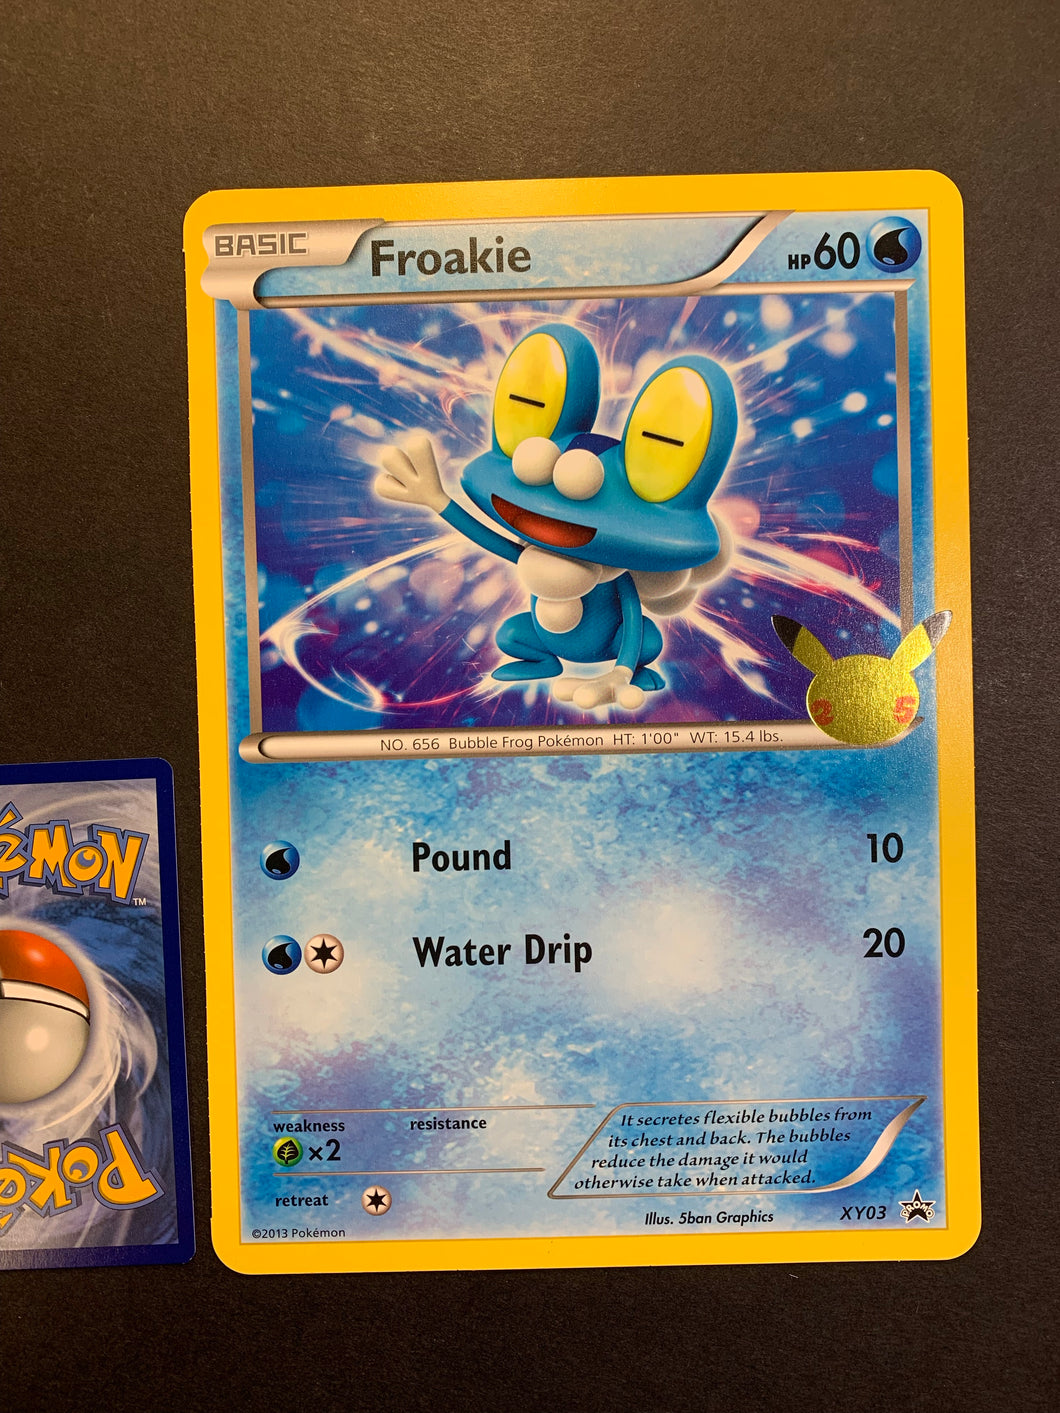 Pokemon Jumbo Froakie Card - XY03 - 25th Anniversary Promo